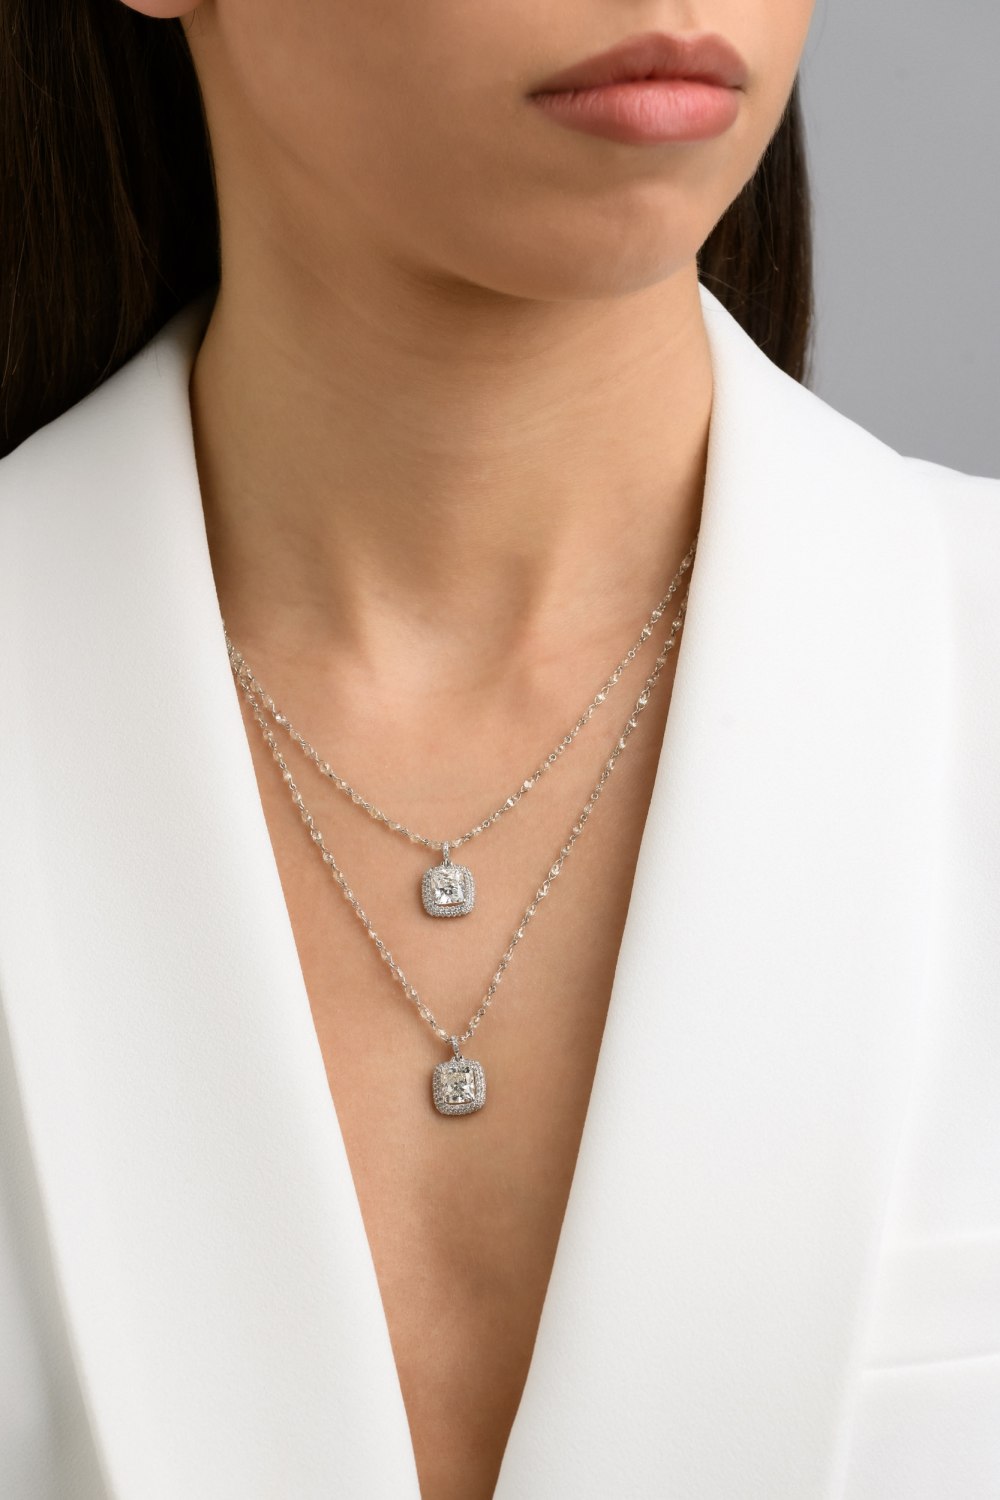 KESSARIS - Diamond Double Pendant Necklace